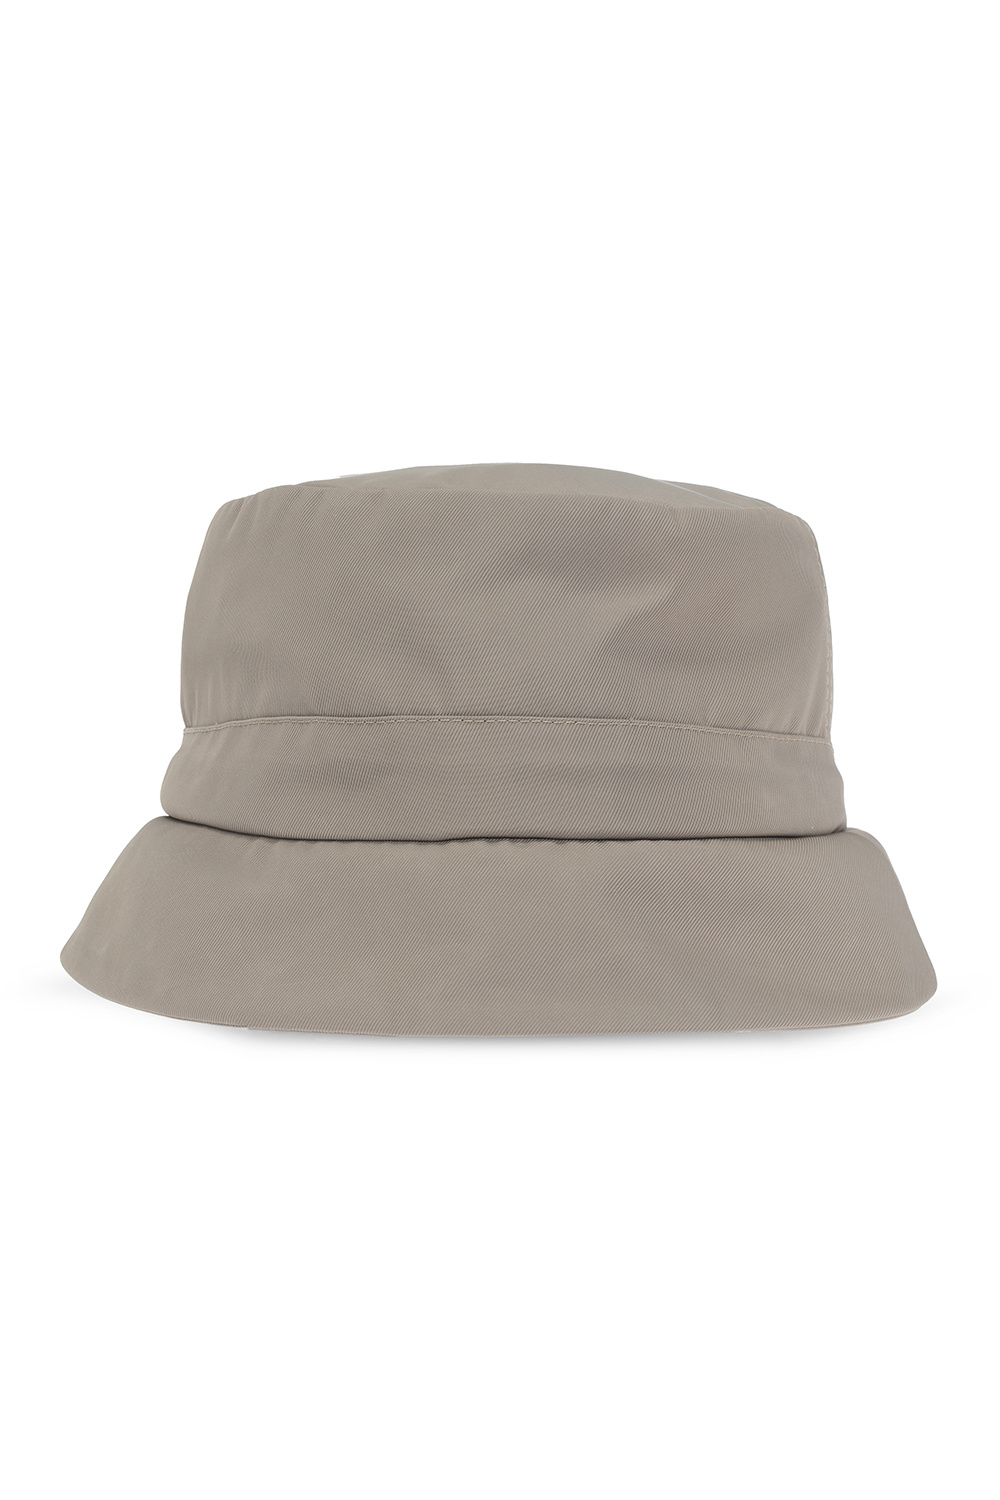 Giorgio Armani Bucket hat Goes with logo